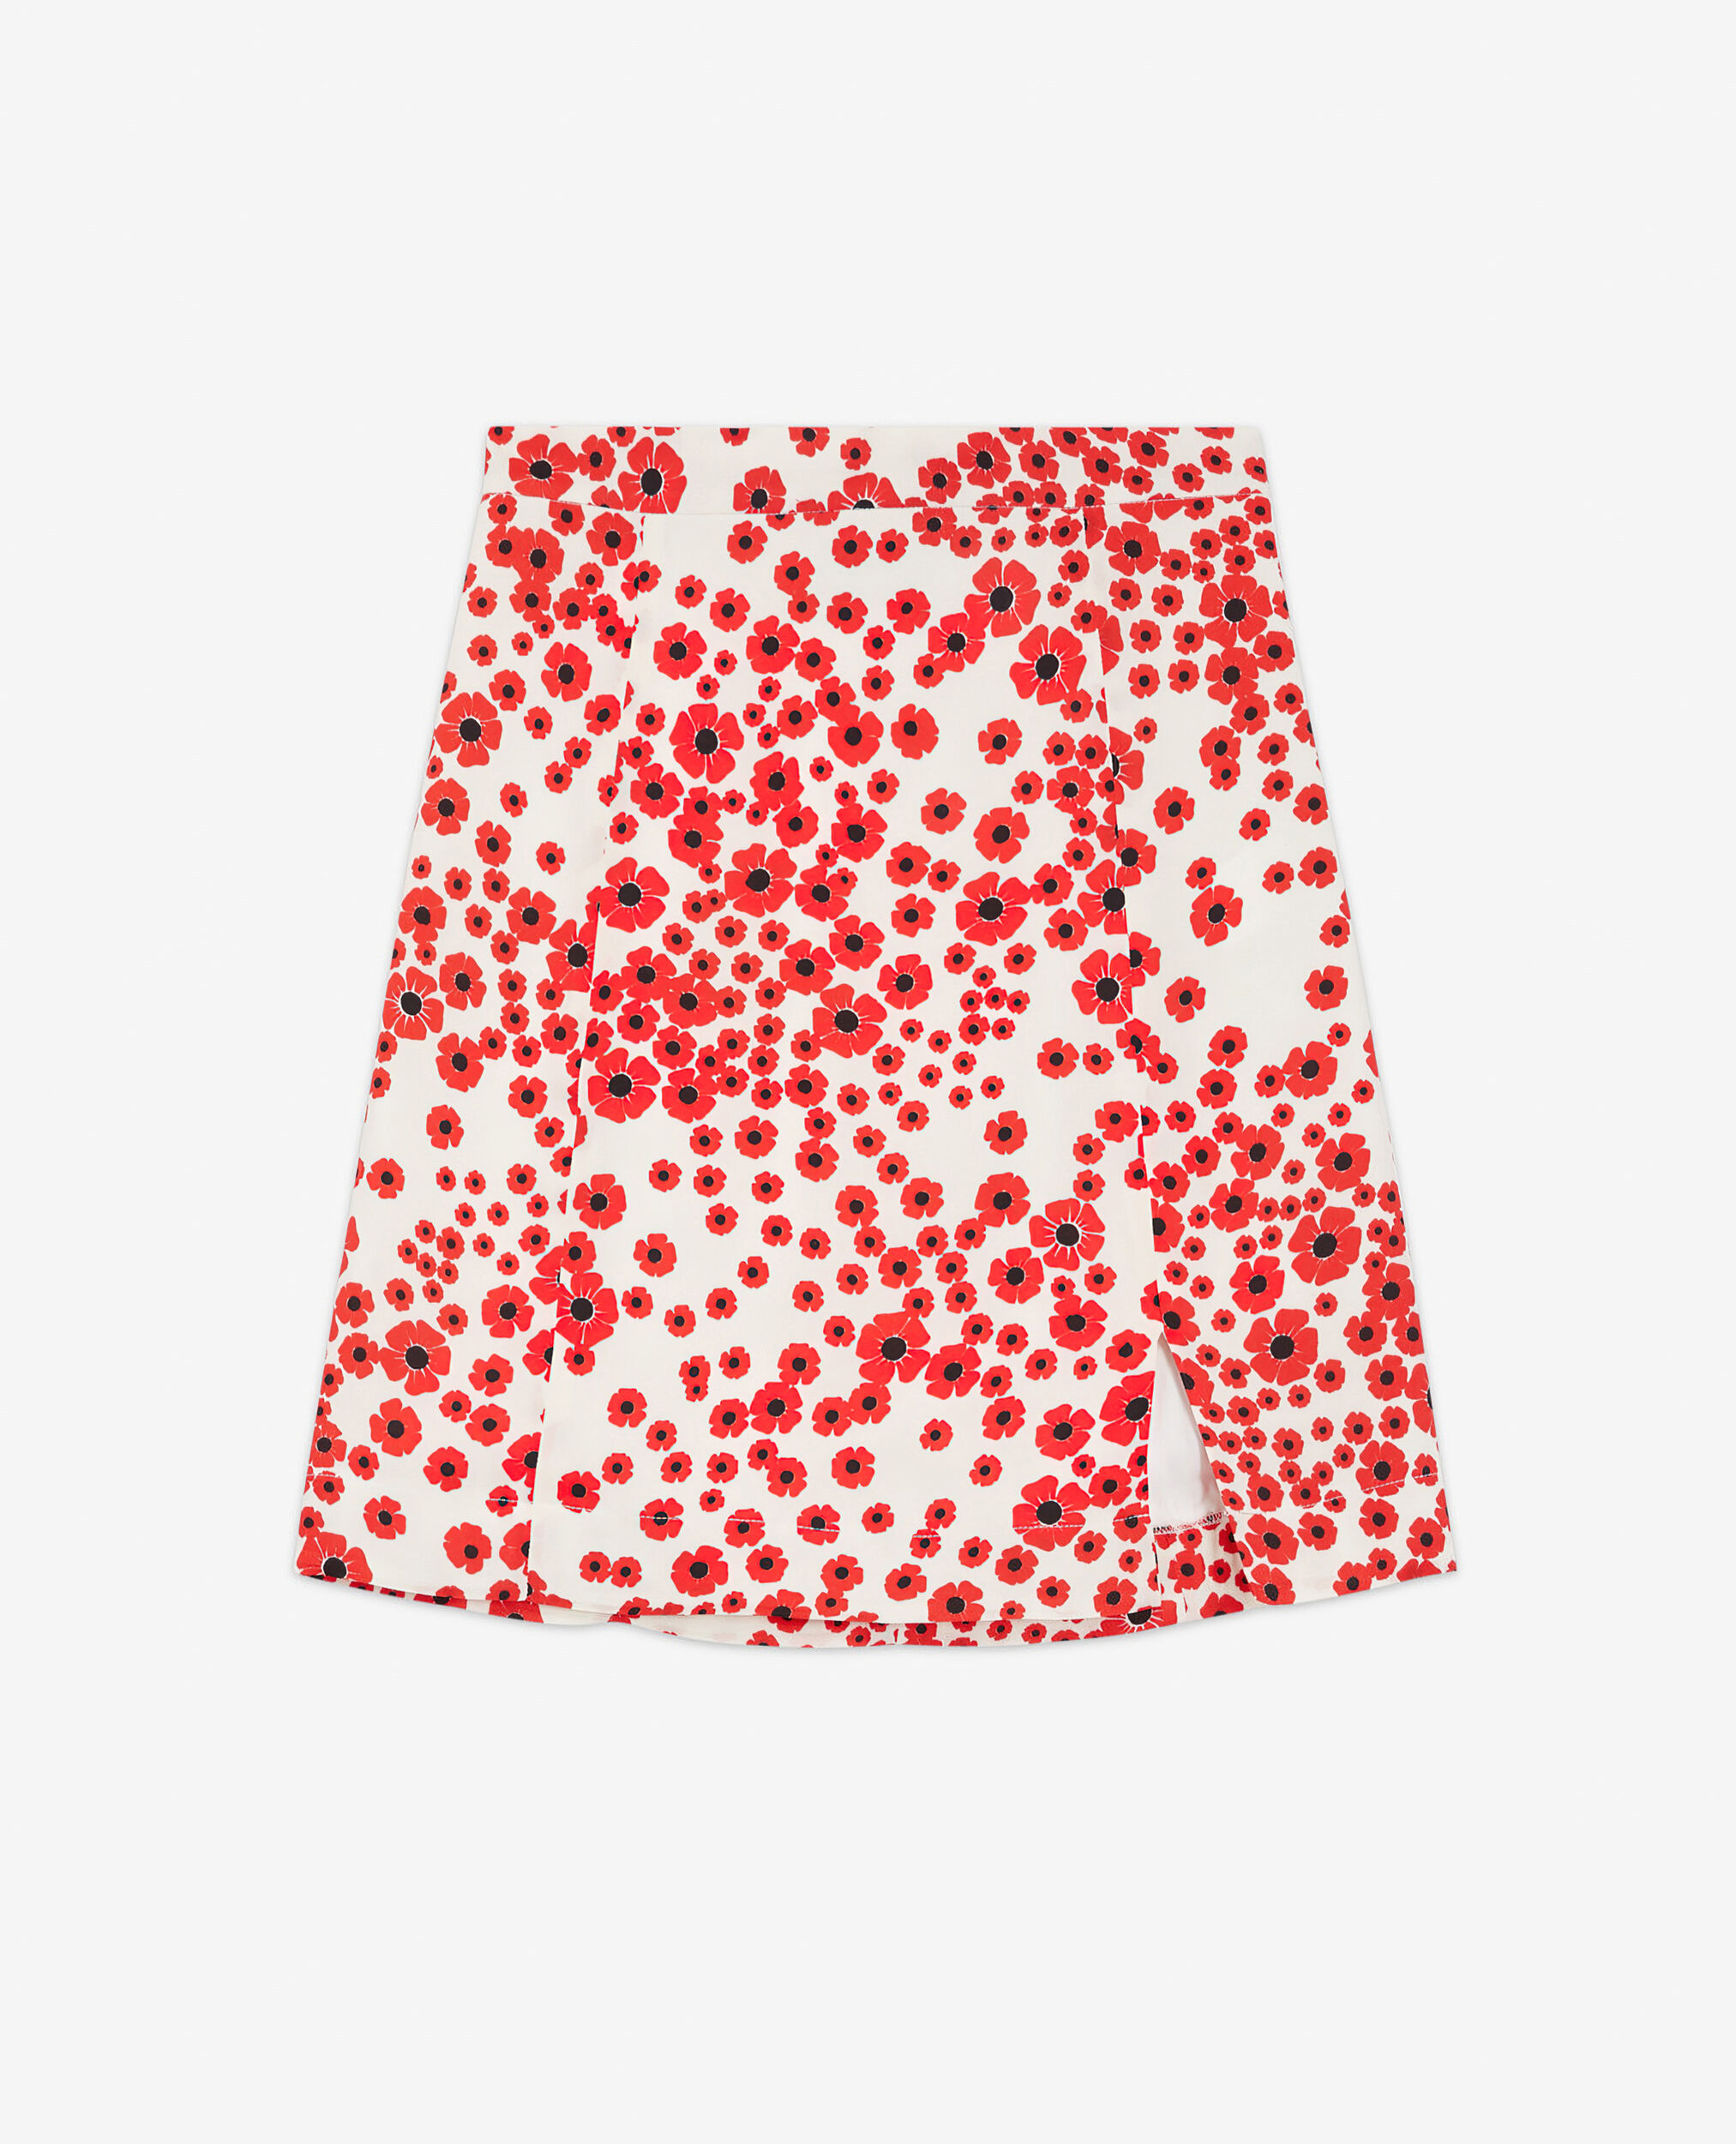 Short red floral skirt, RED / WHITE, hi-res image number null